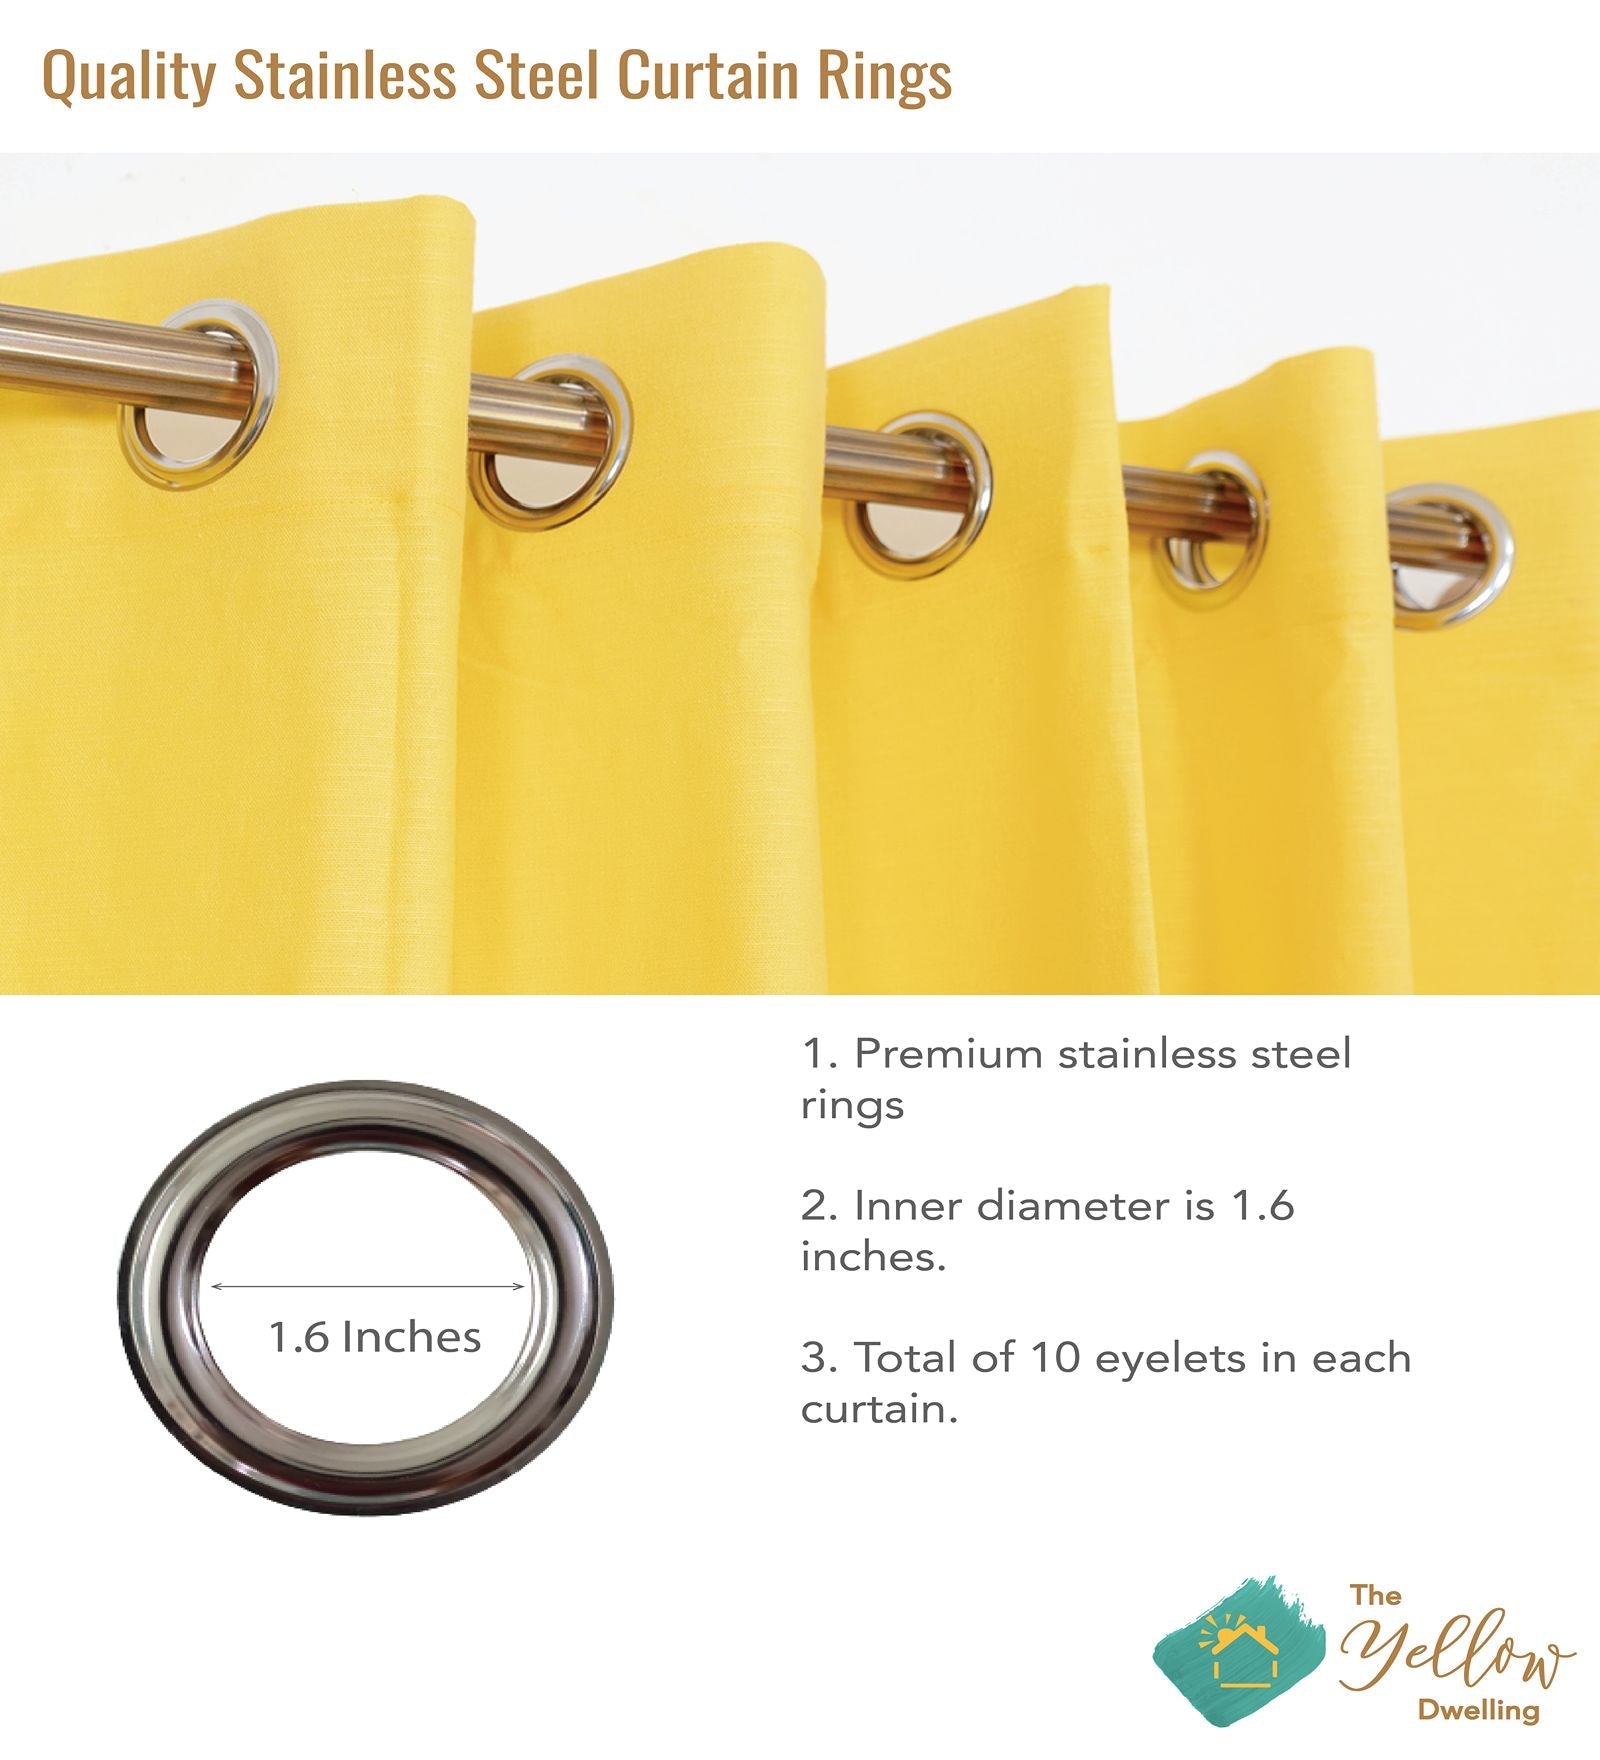 Uneven Checks Printed Sheer Curtain - Yellow